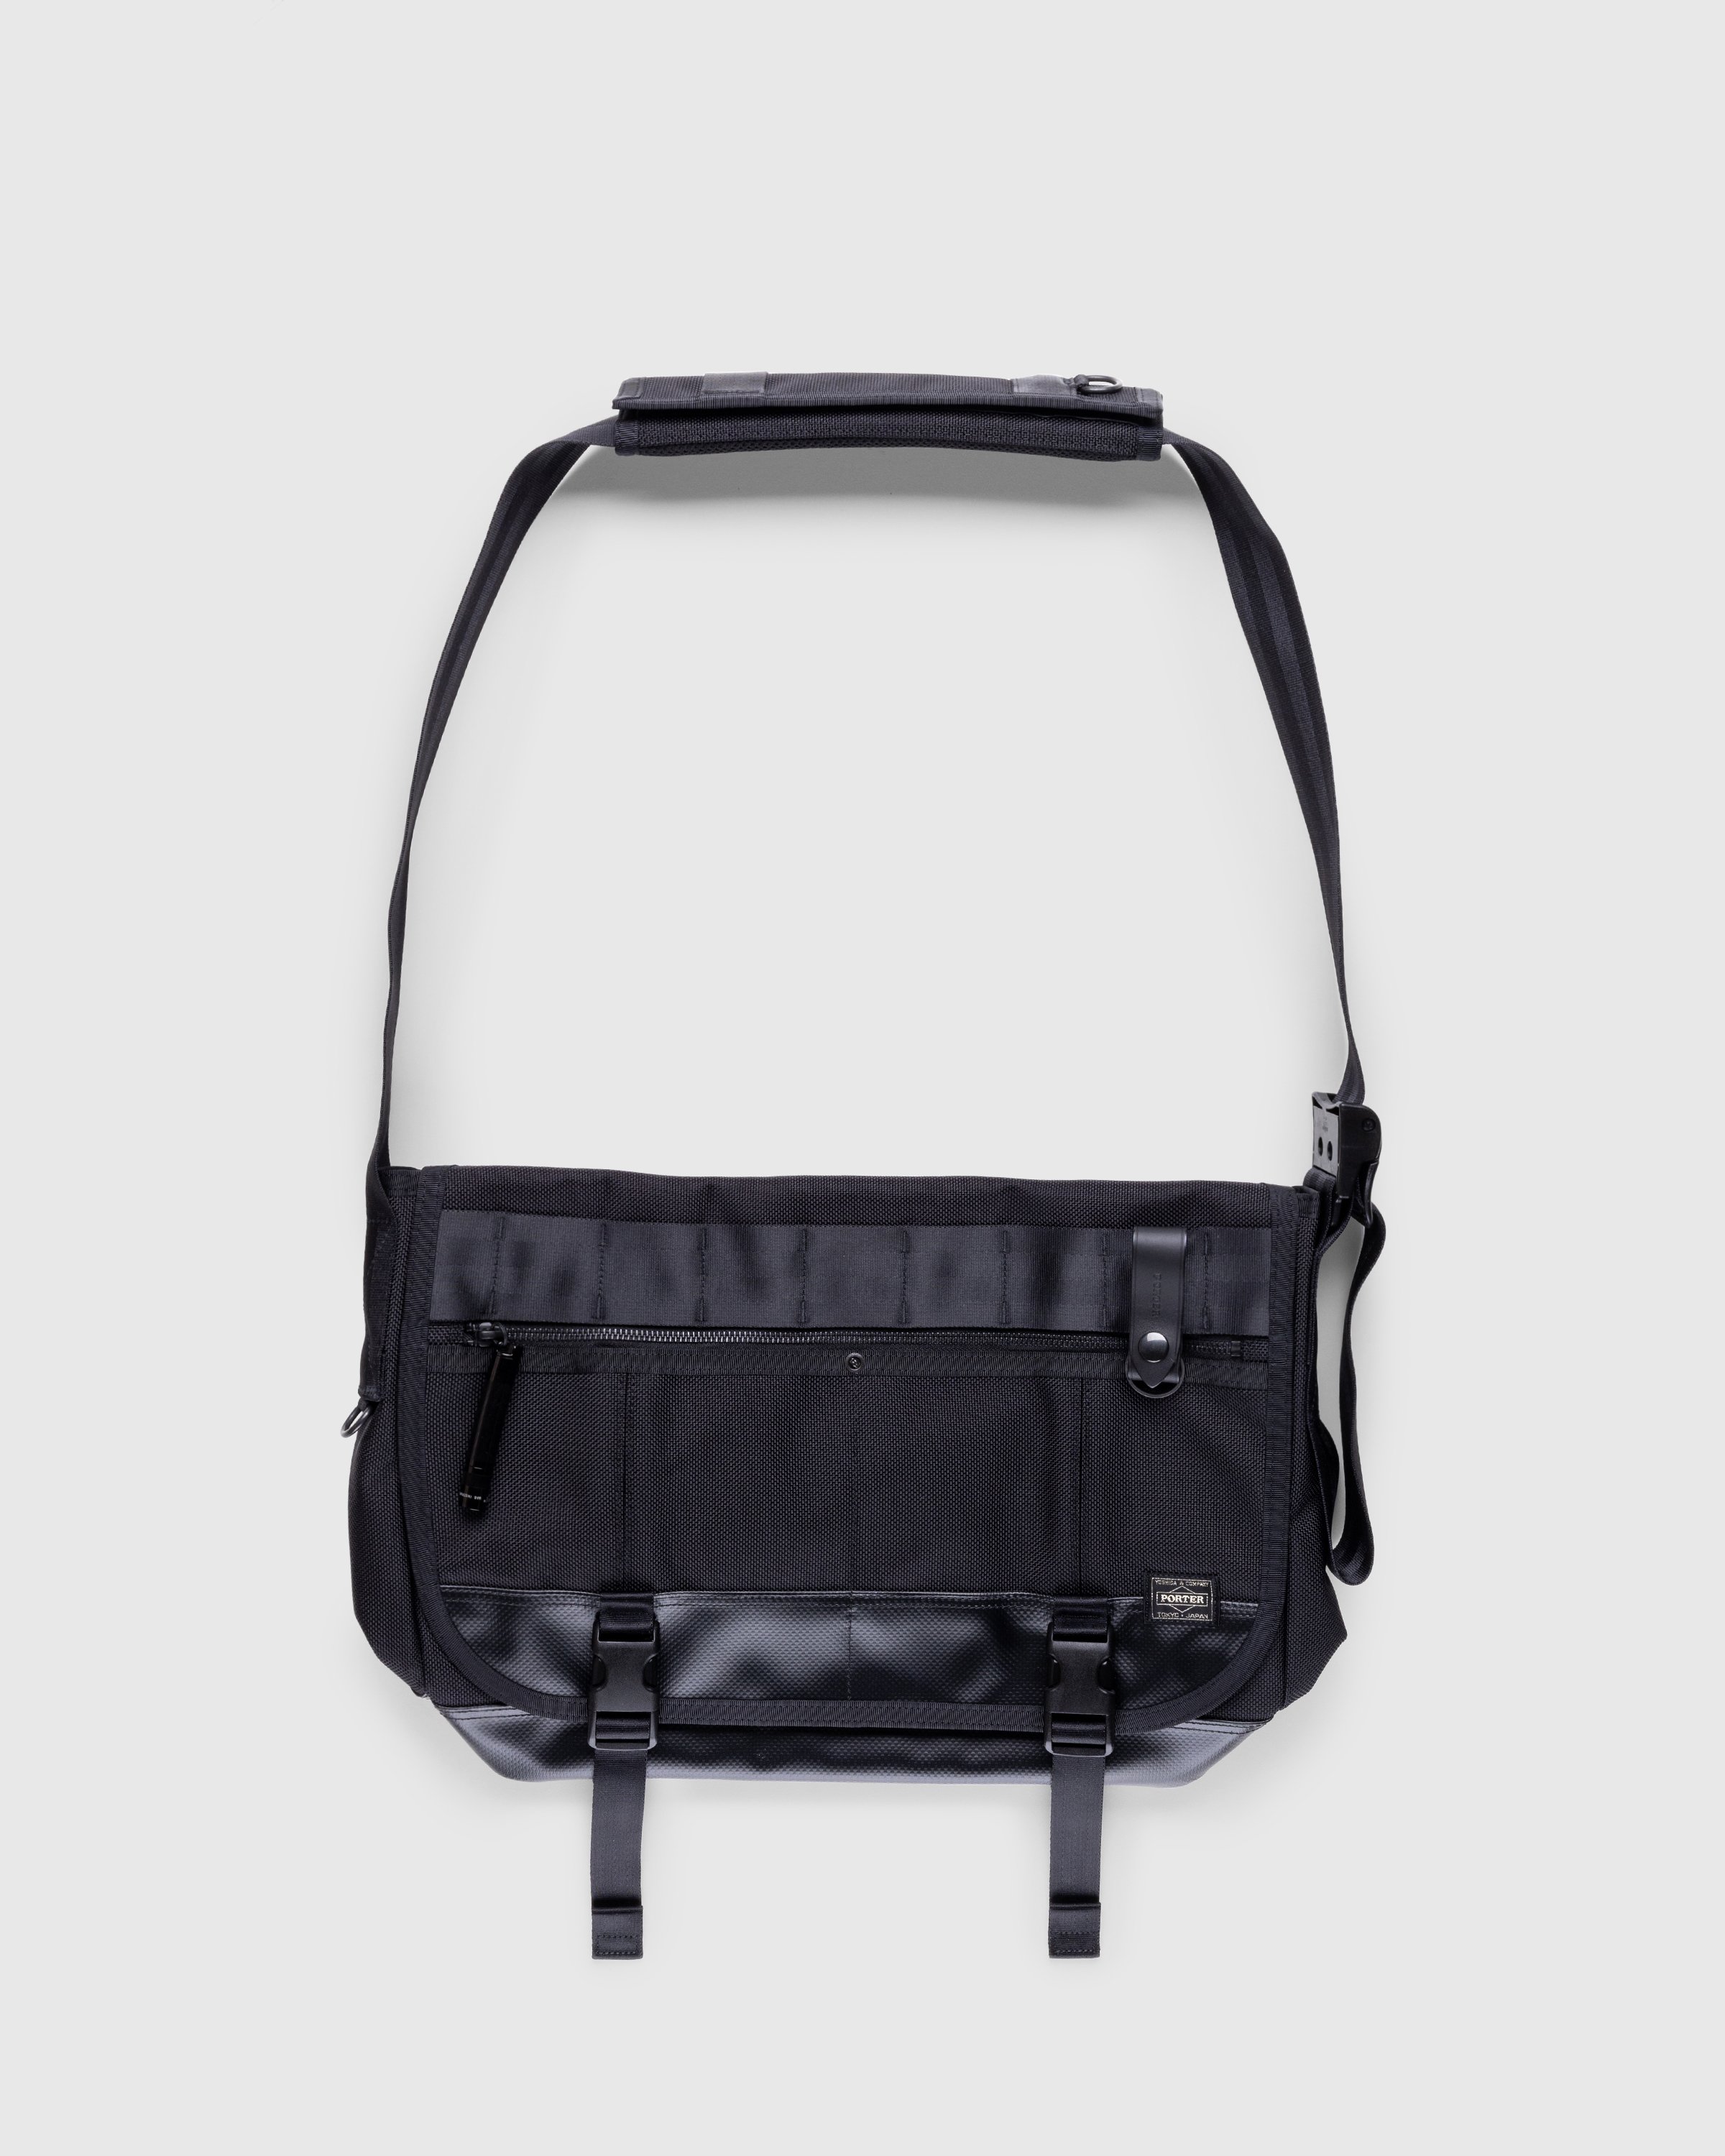 Porter-Yoshida & Co. - Heat Messenger Bag Black - Accessories - Black - Image 1